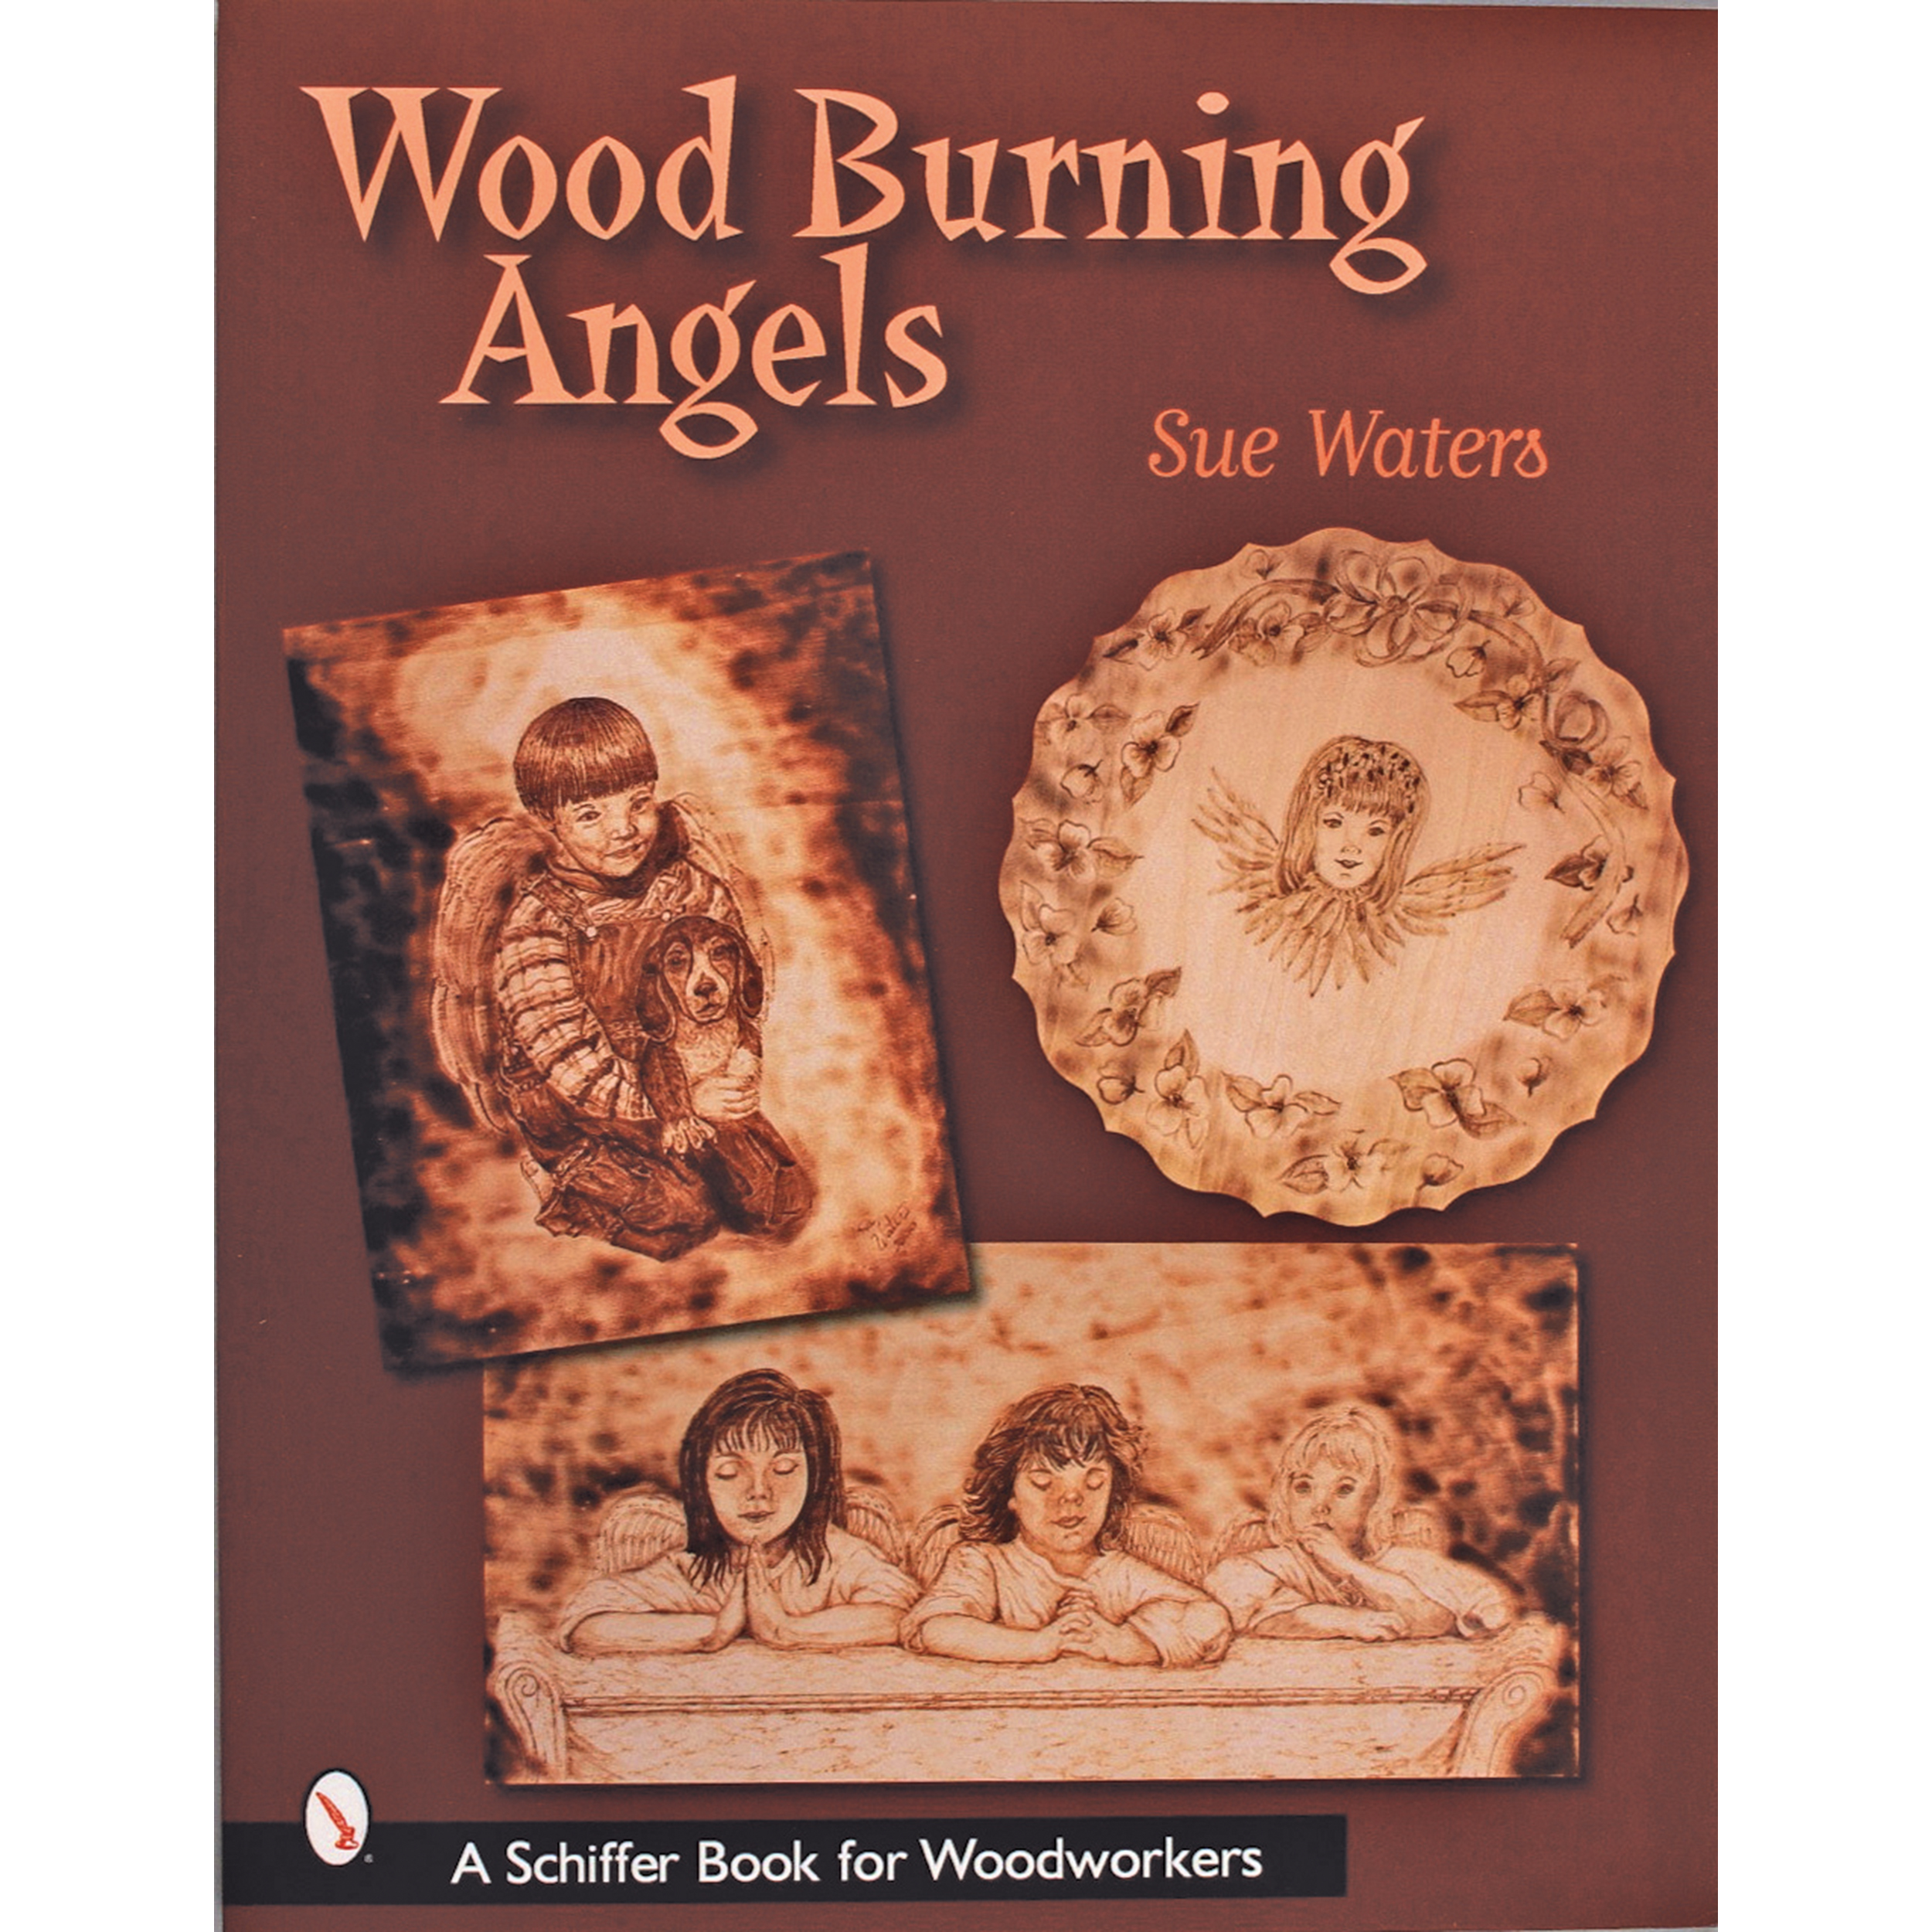 Wood Burning Angels